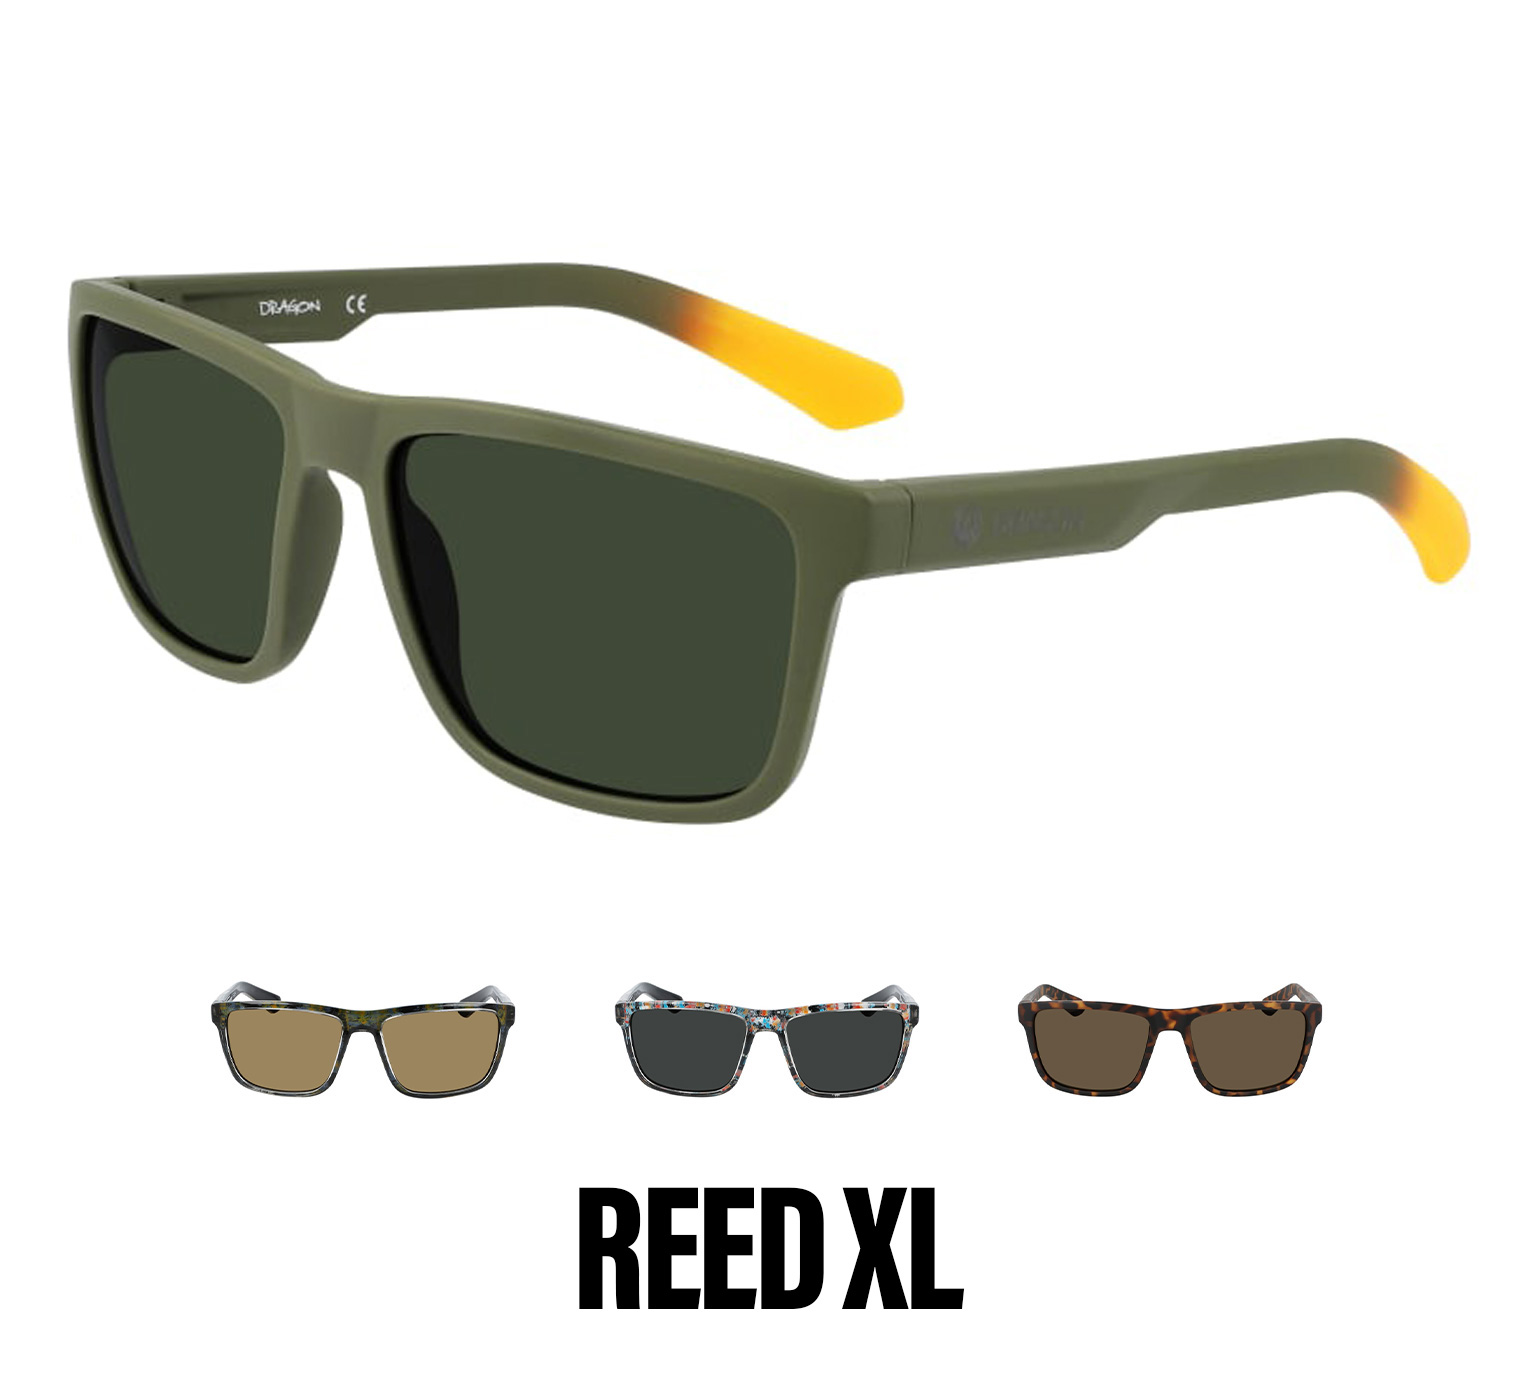 Reed XL